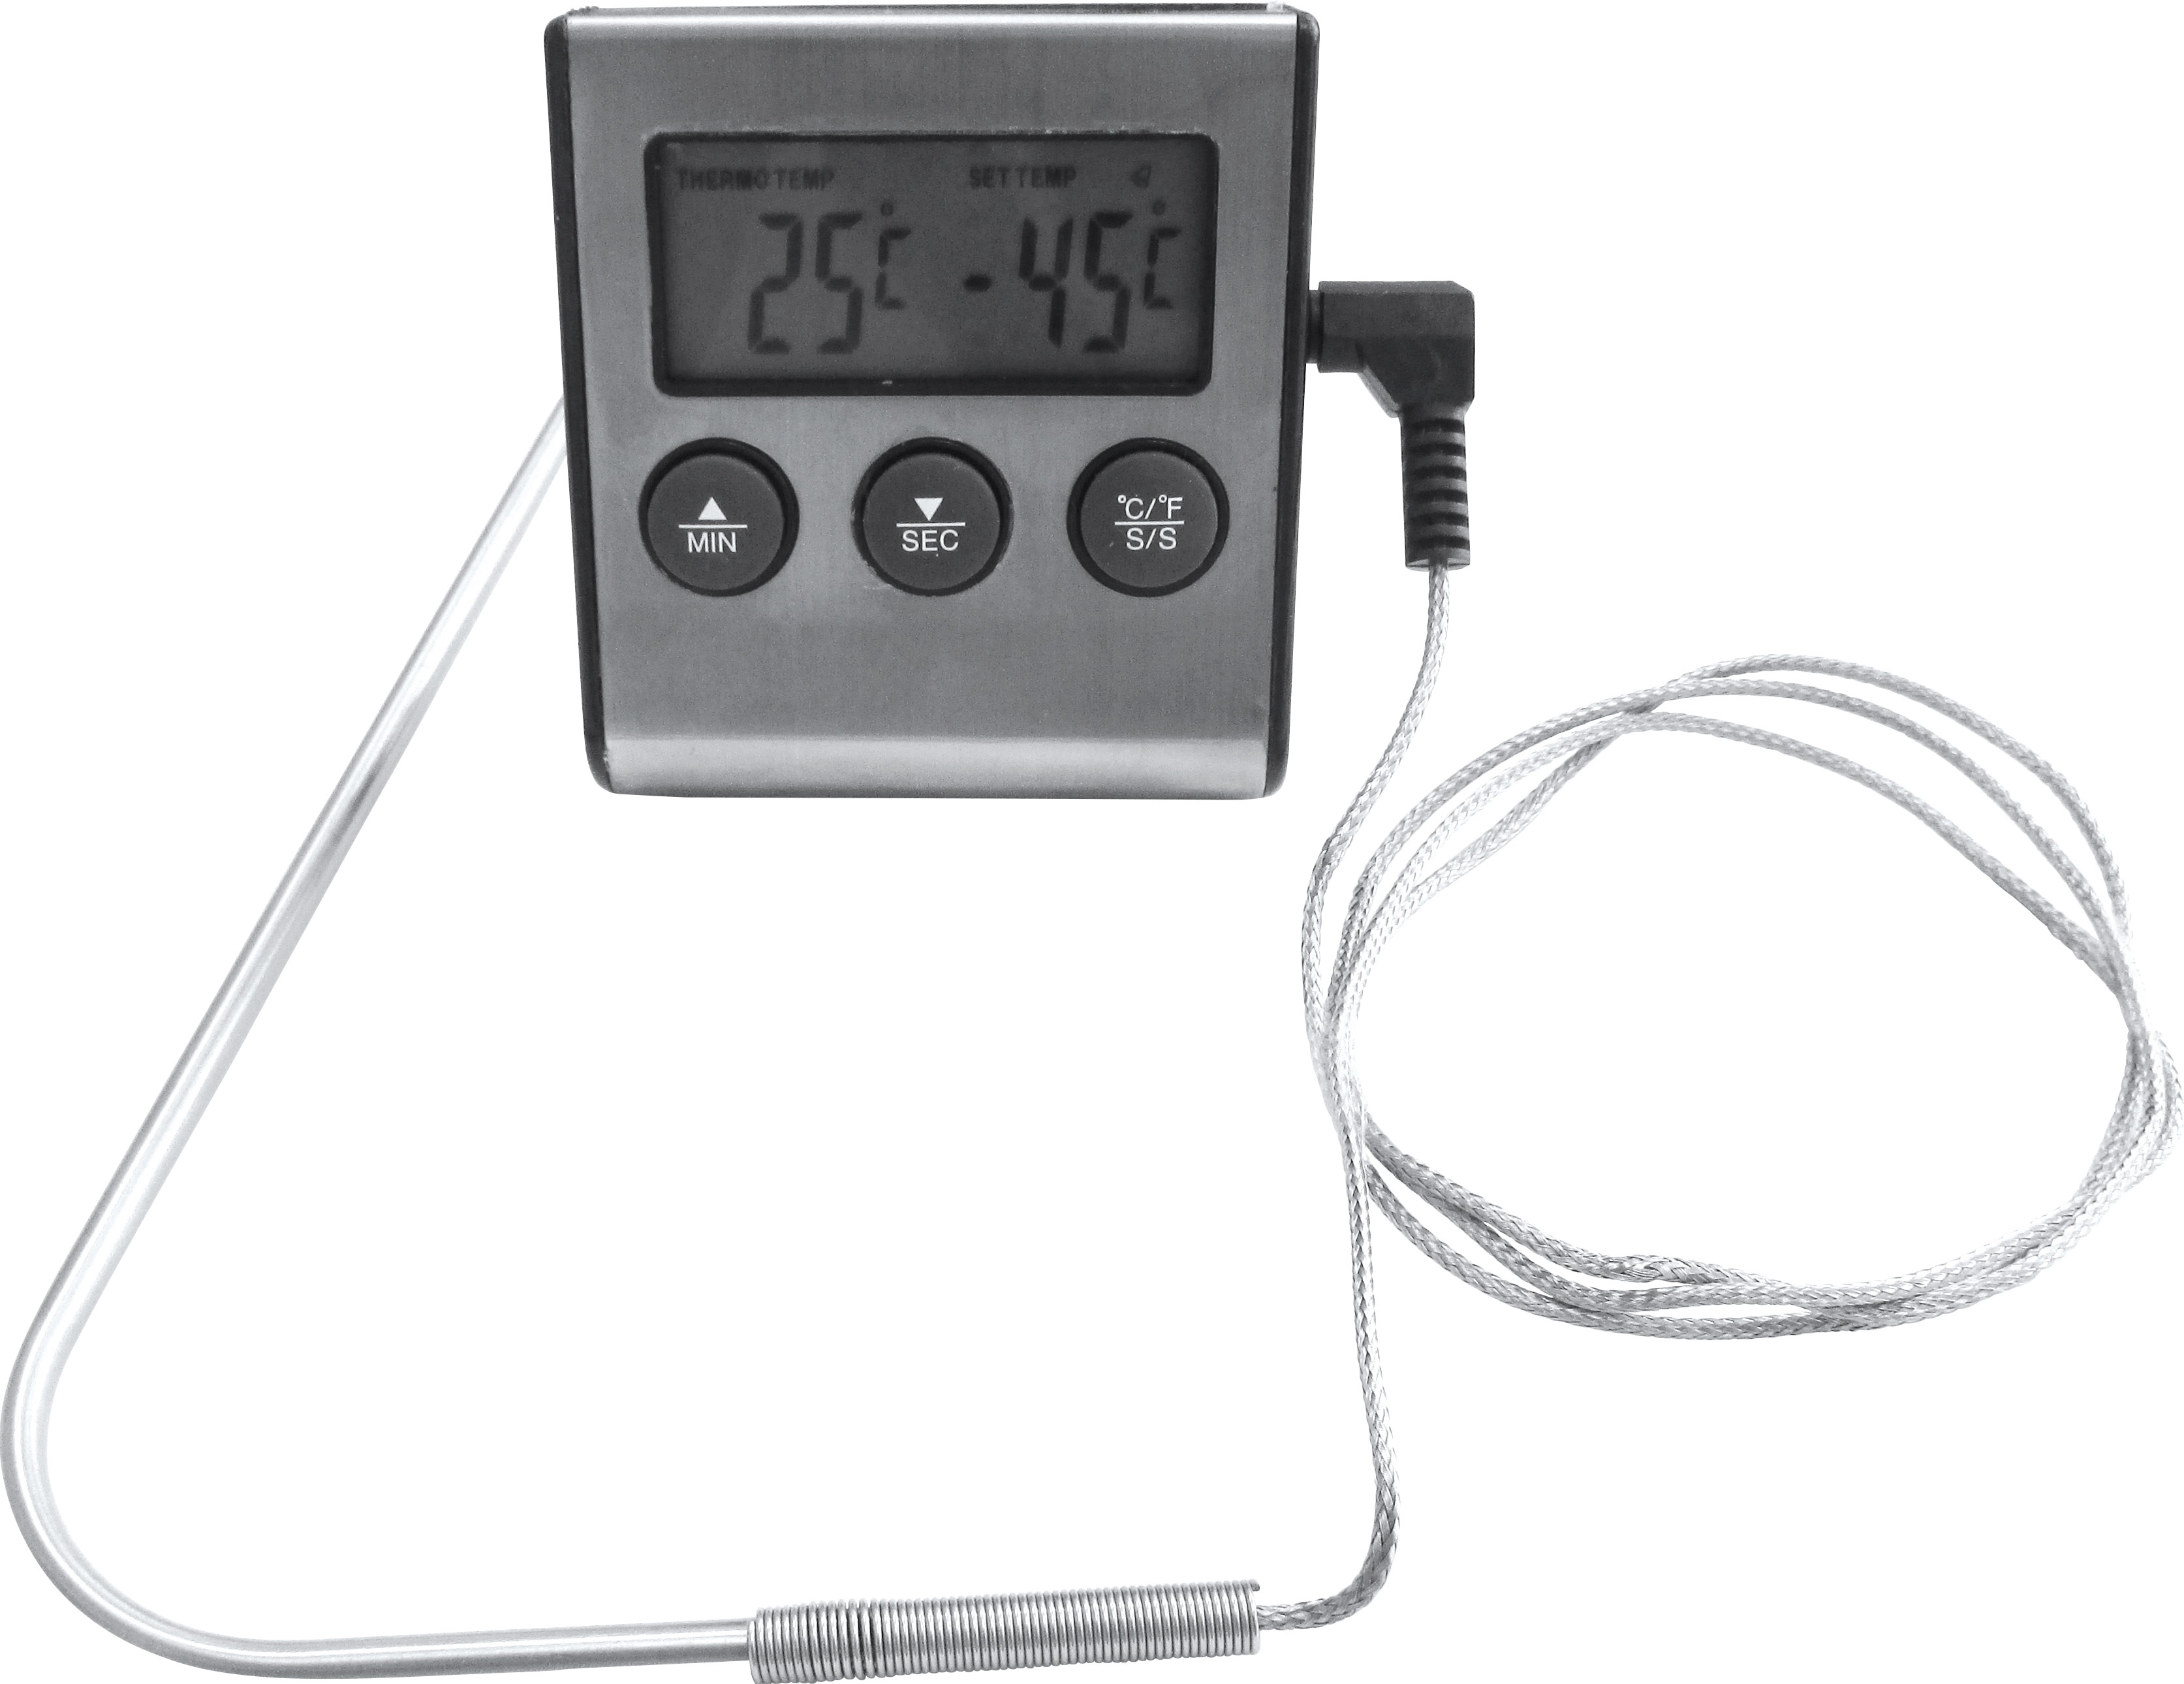 Tepro Grill-Bratenthermometer Digital kaufen bei OBI | Grillthermometer